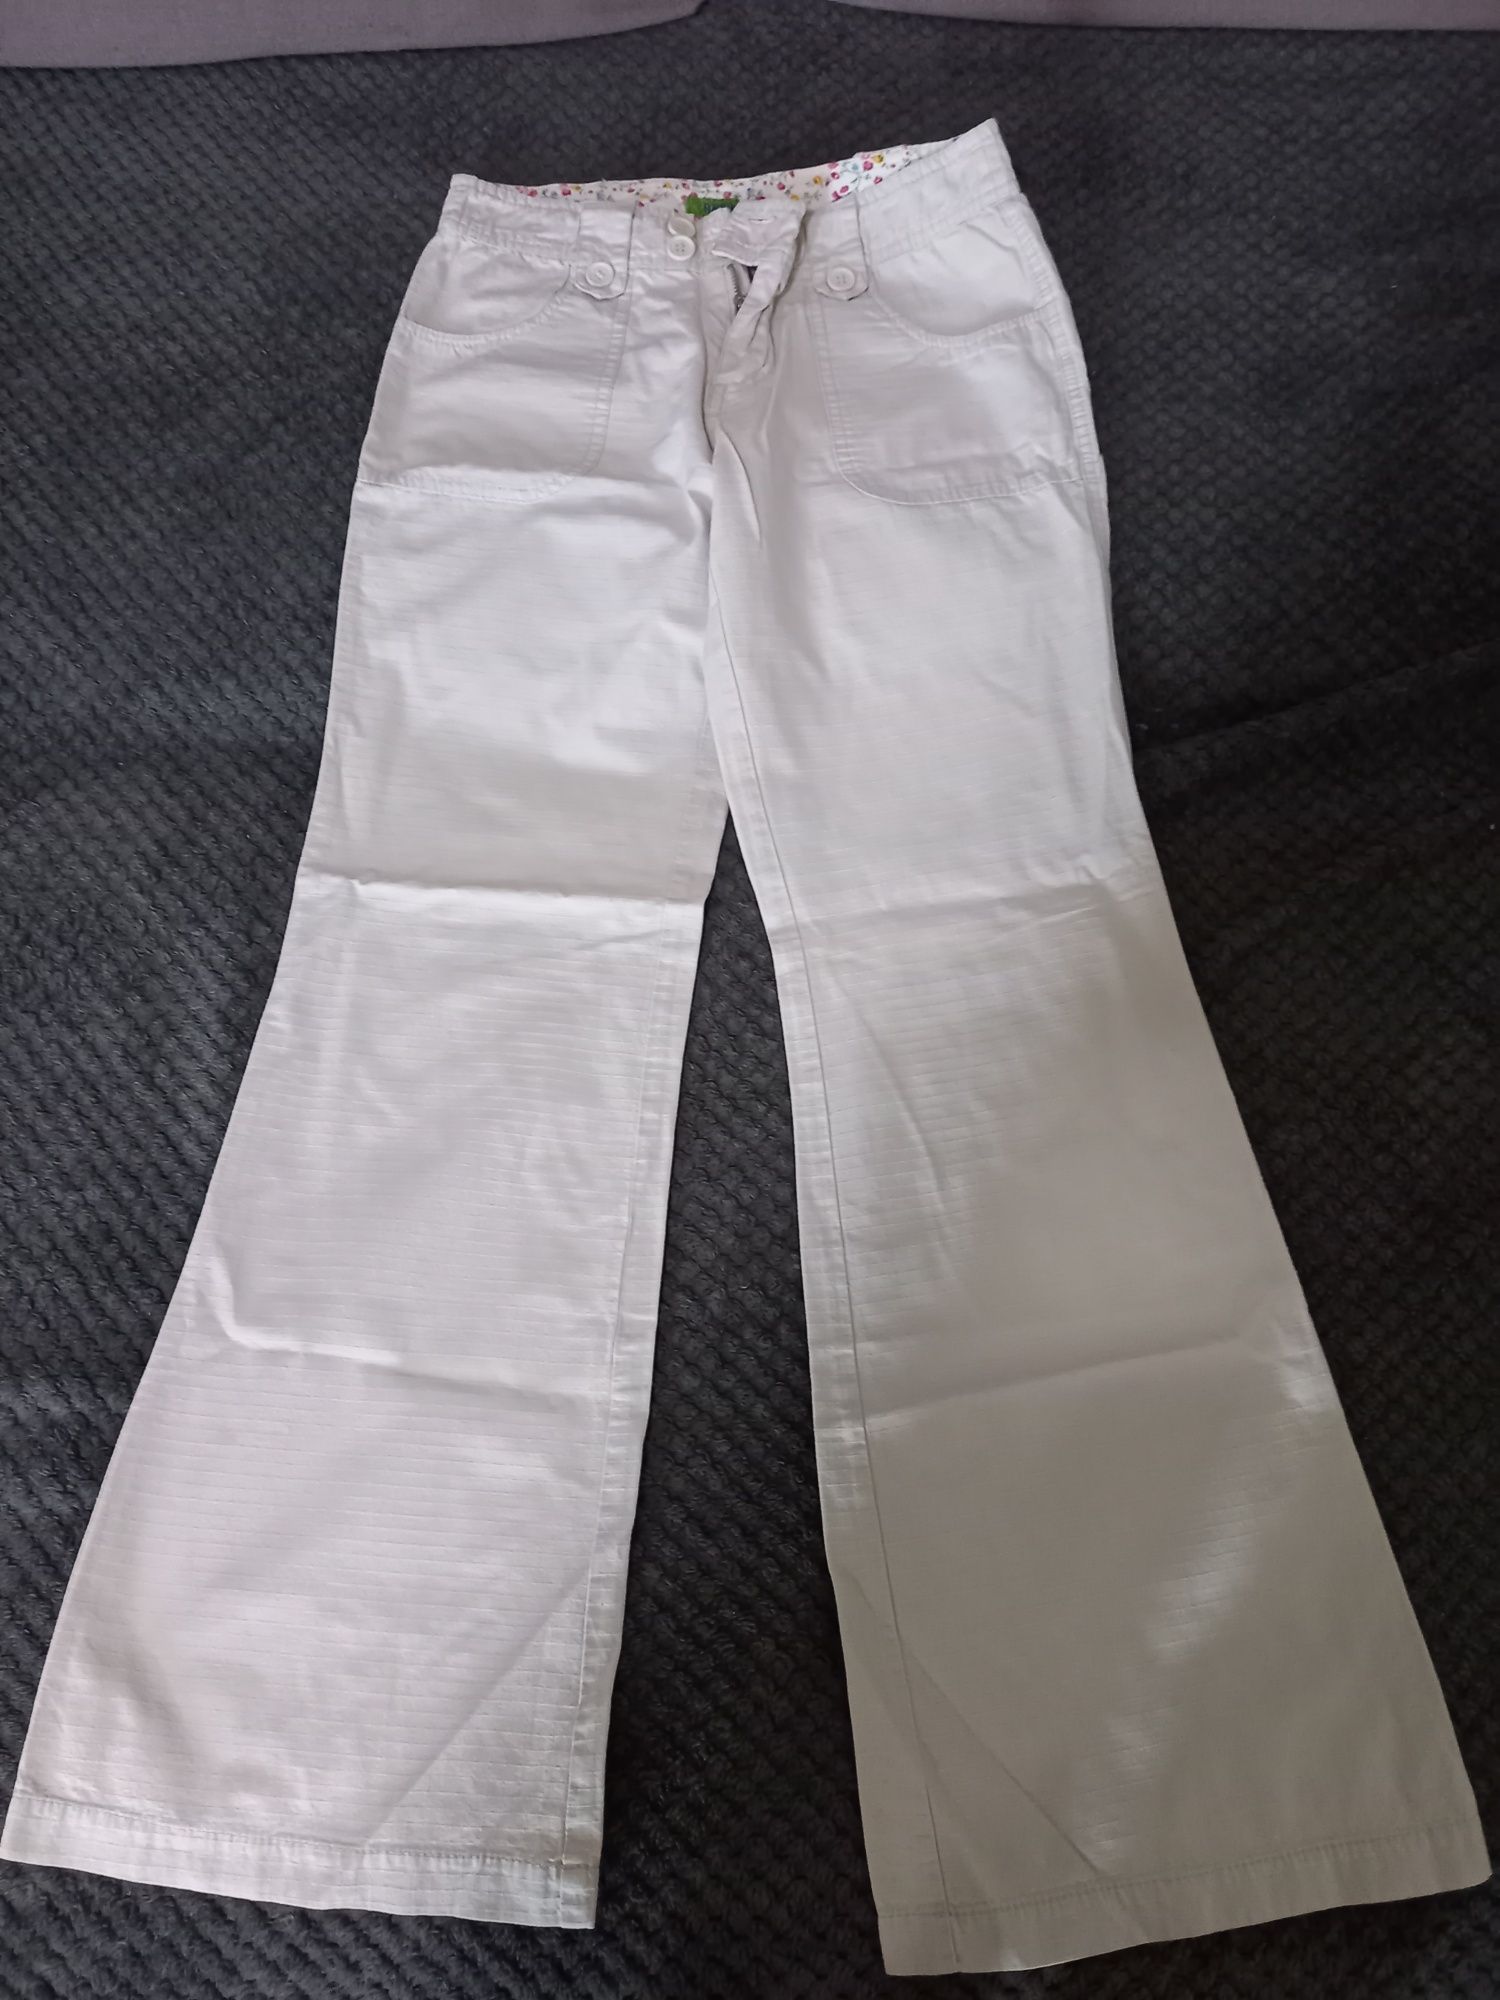 Spodnie beżowe Refree rozmiar M